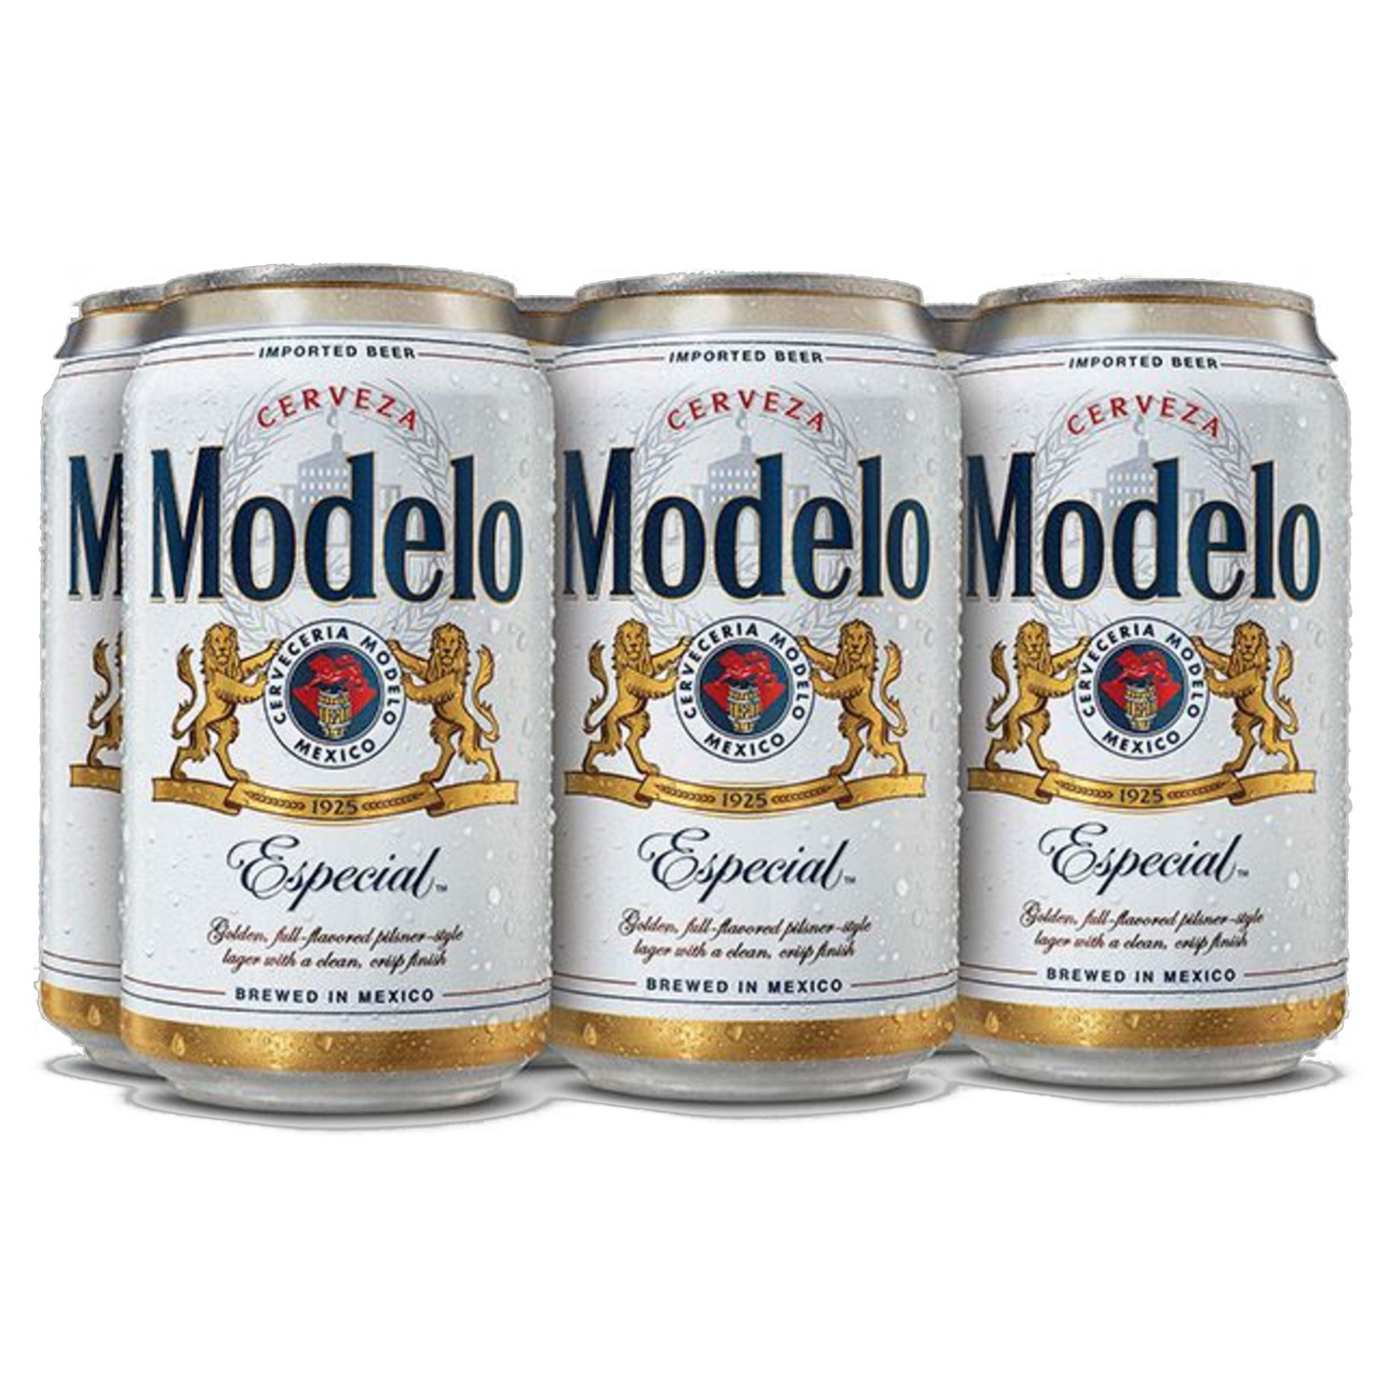 Modelo Especial Lager Mexican Beer 6 pk Bottles